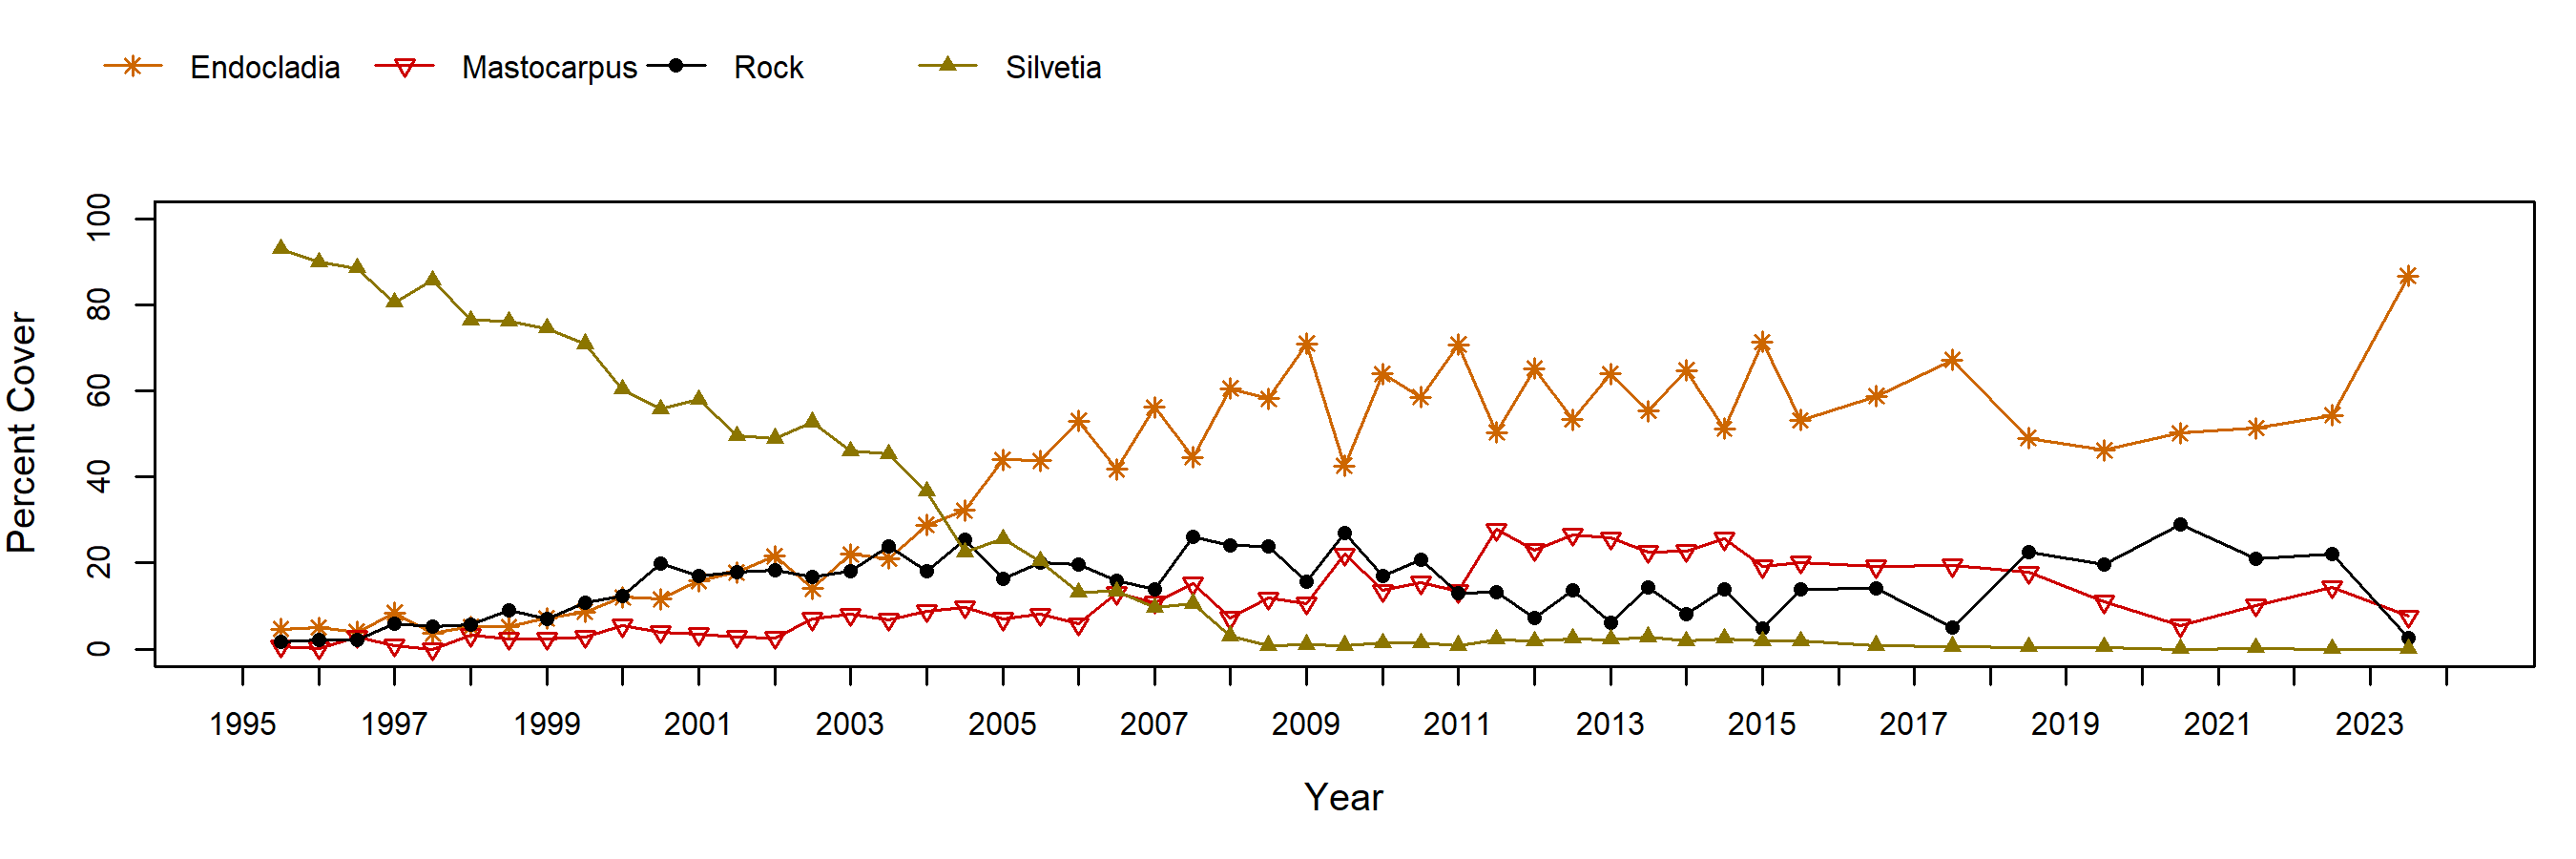 Shell Beach Silvetia trend plot